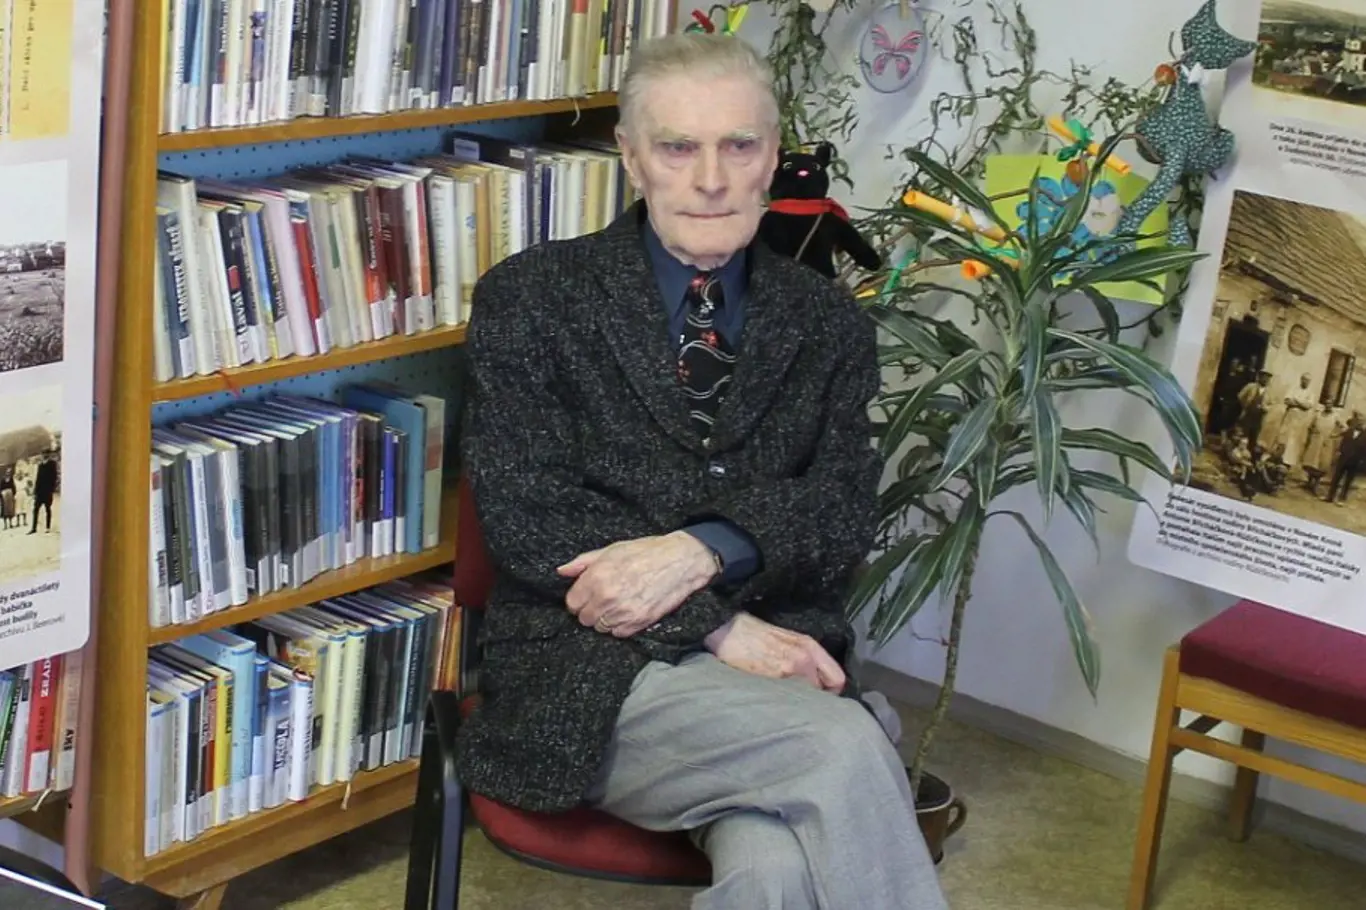 Profesor Robert Kvaček.